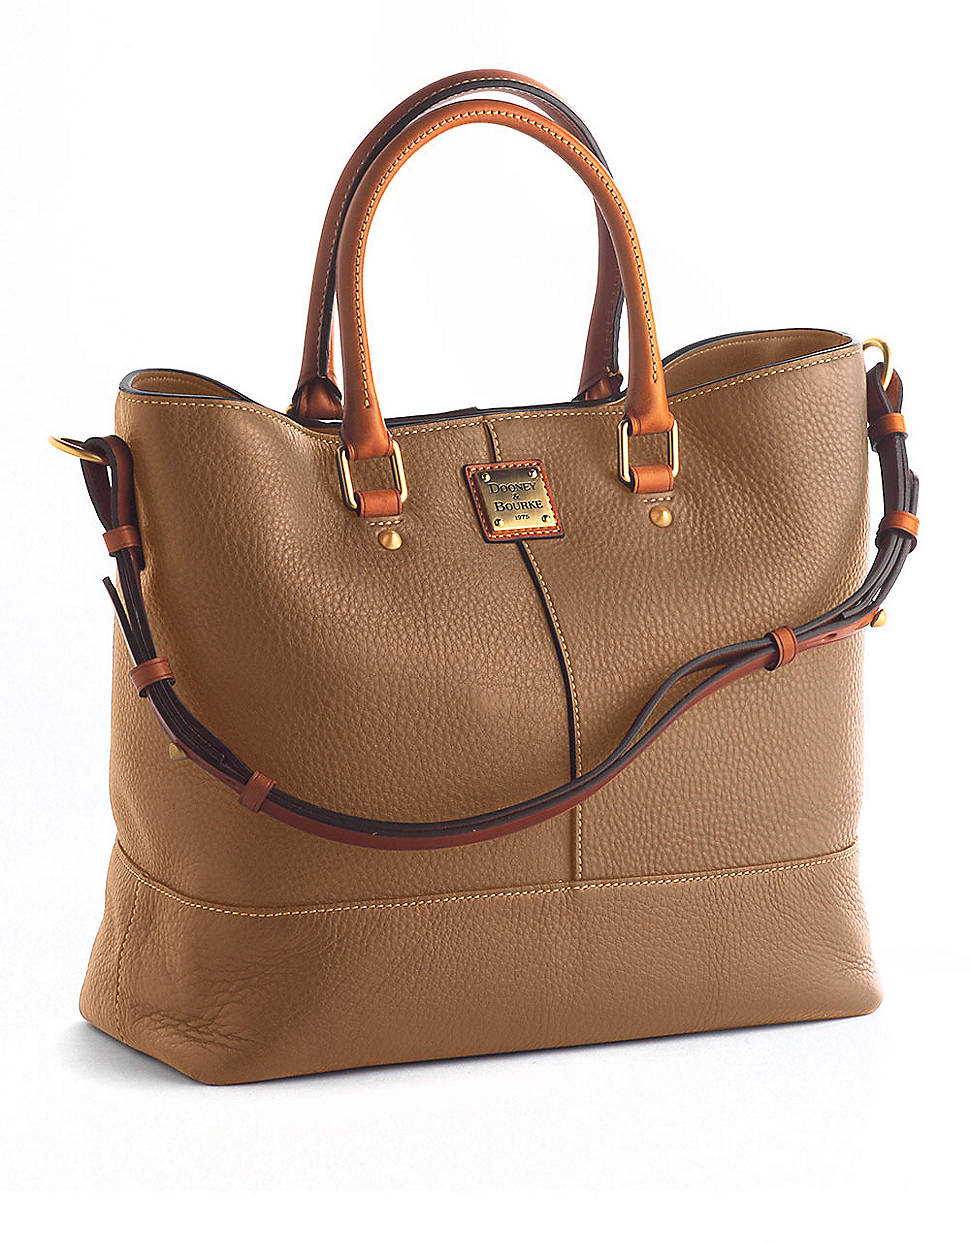 Lyst - Dooney & Bourke Dillen Chelsea Leather Shopper Tote Bag in Brown